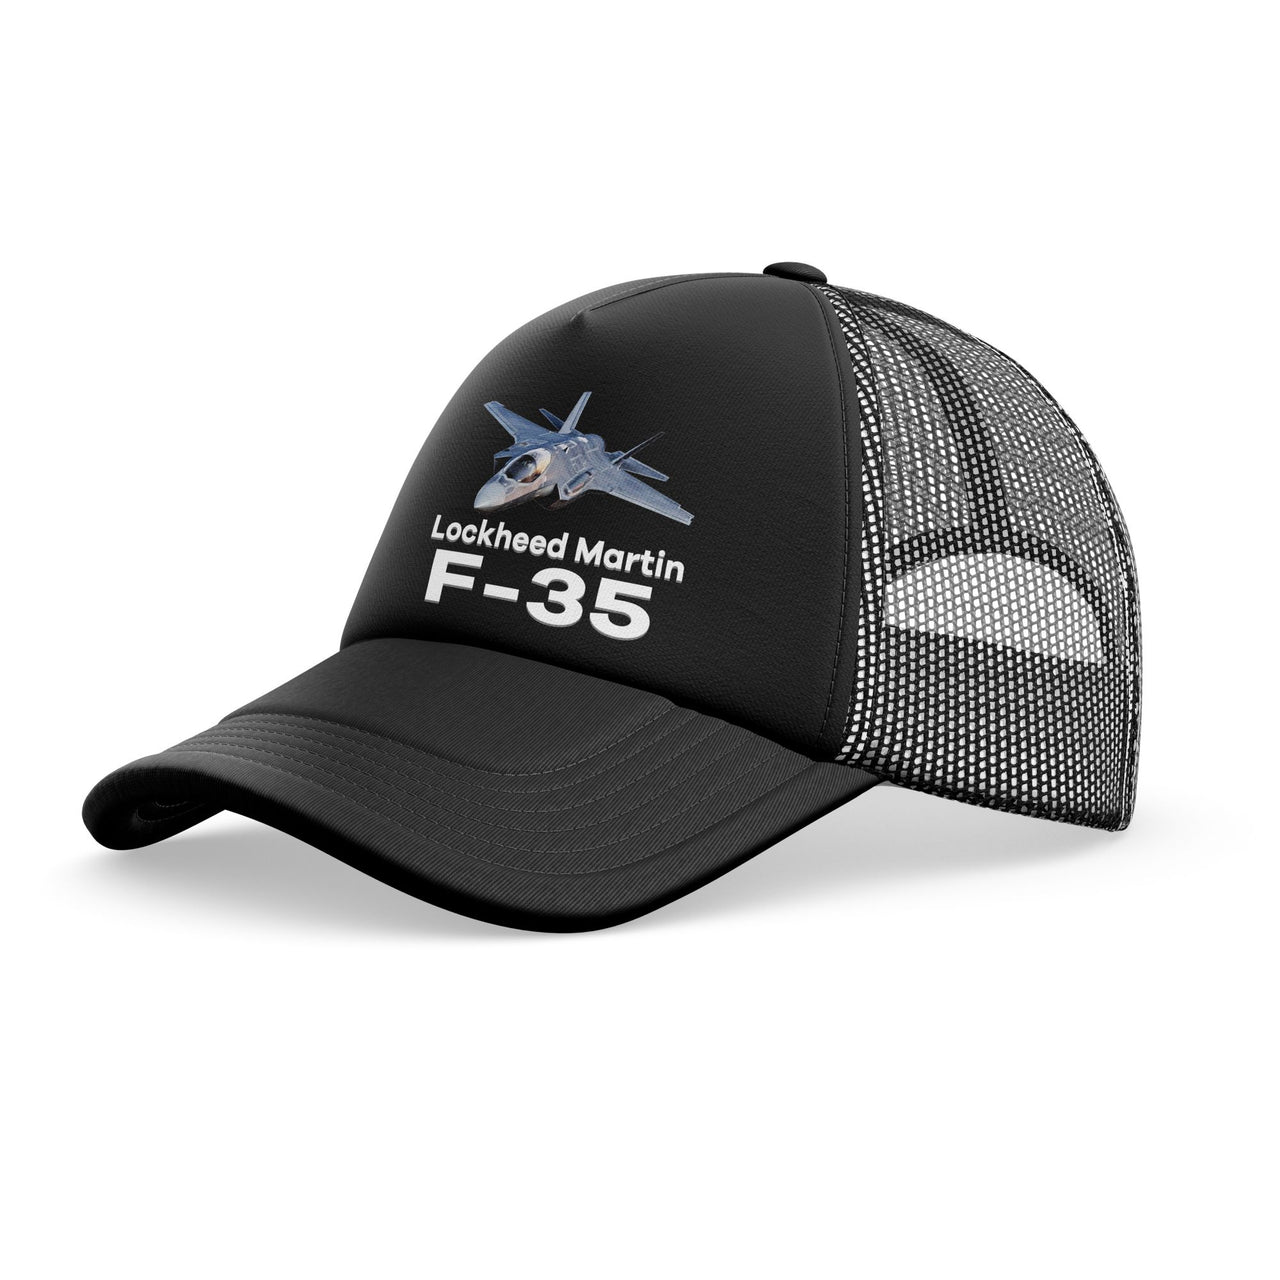 The Lockheed Martin F35 Designed Trucker Caps & Hats